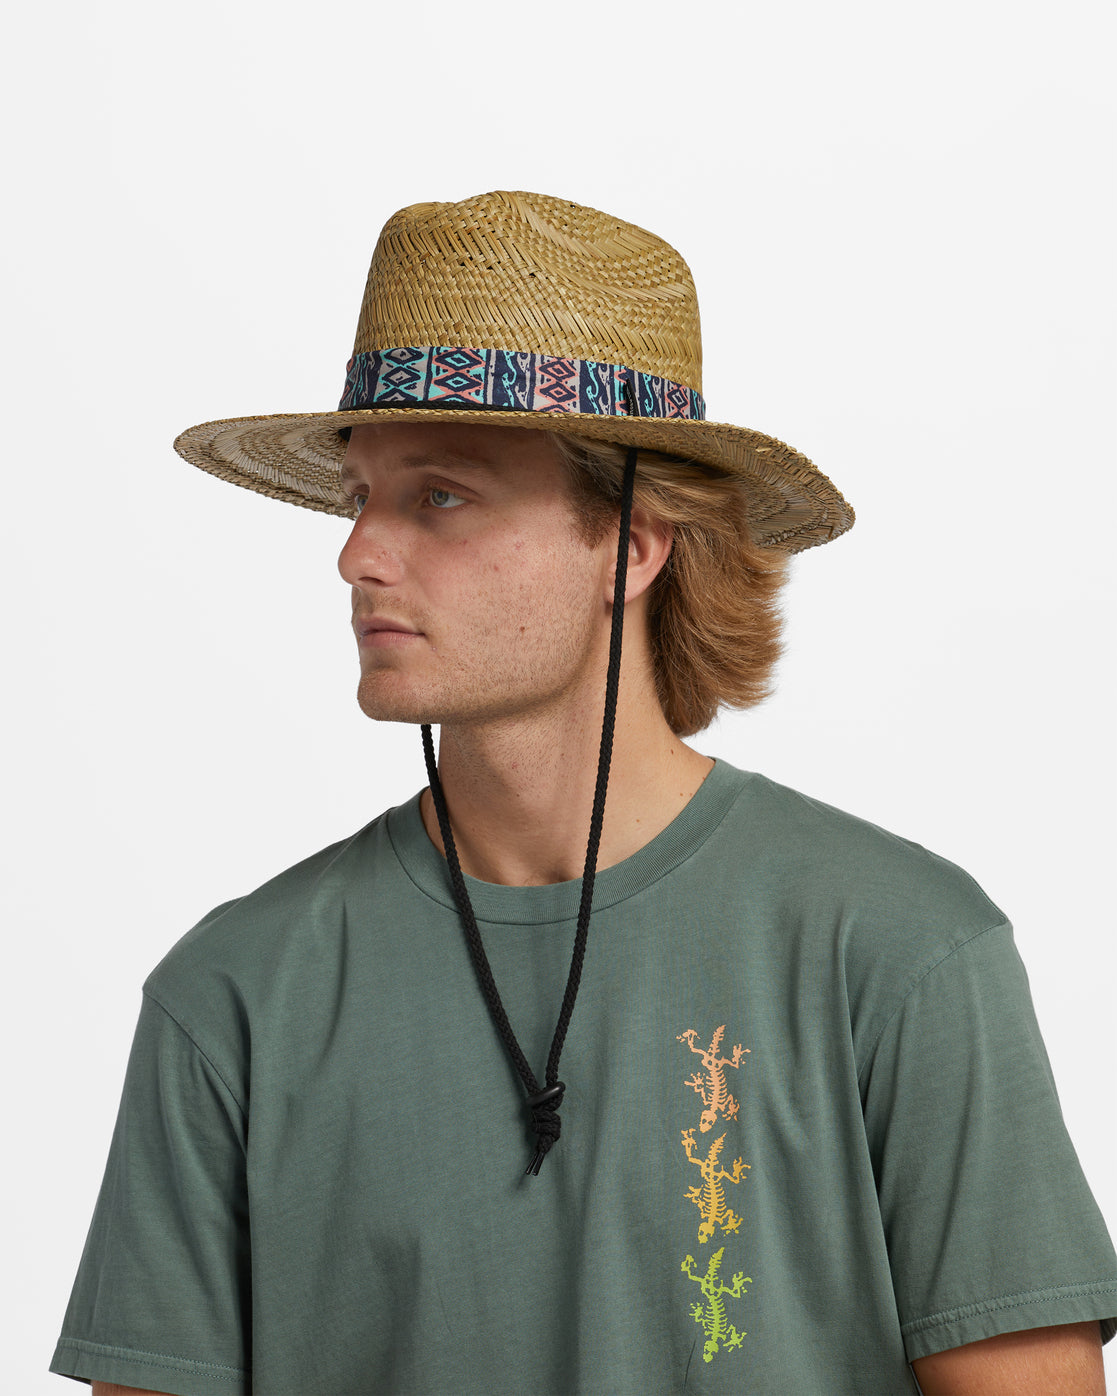 Mai Tides Straw Lifeguard Hat - Minty